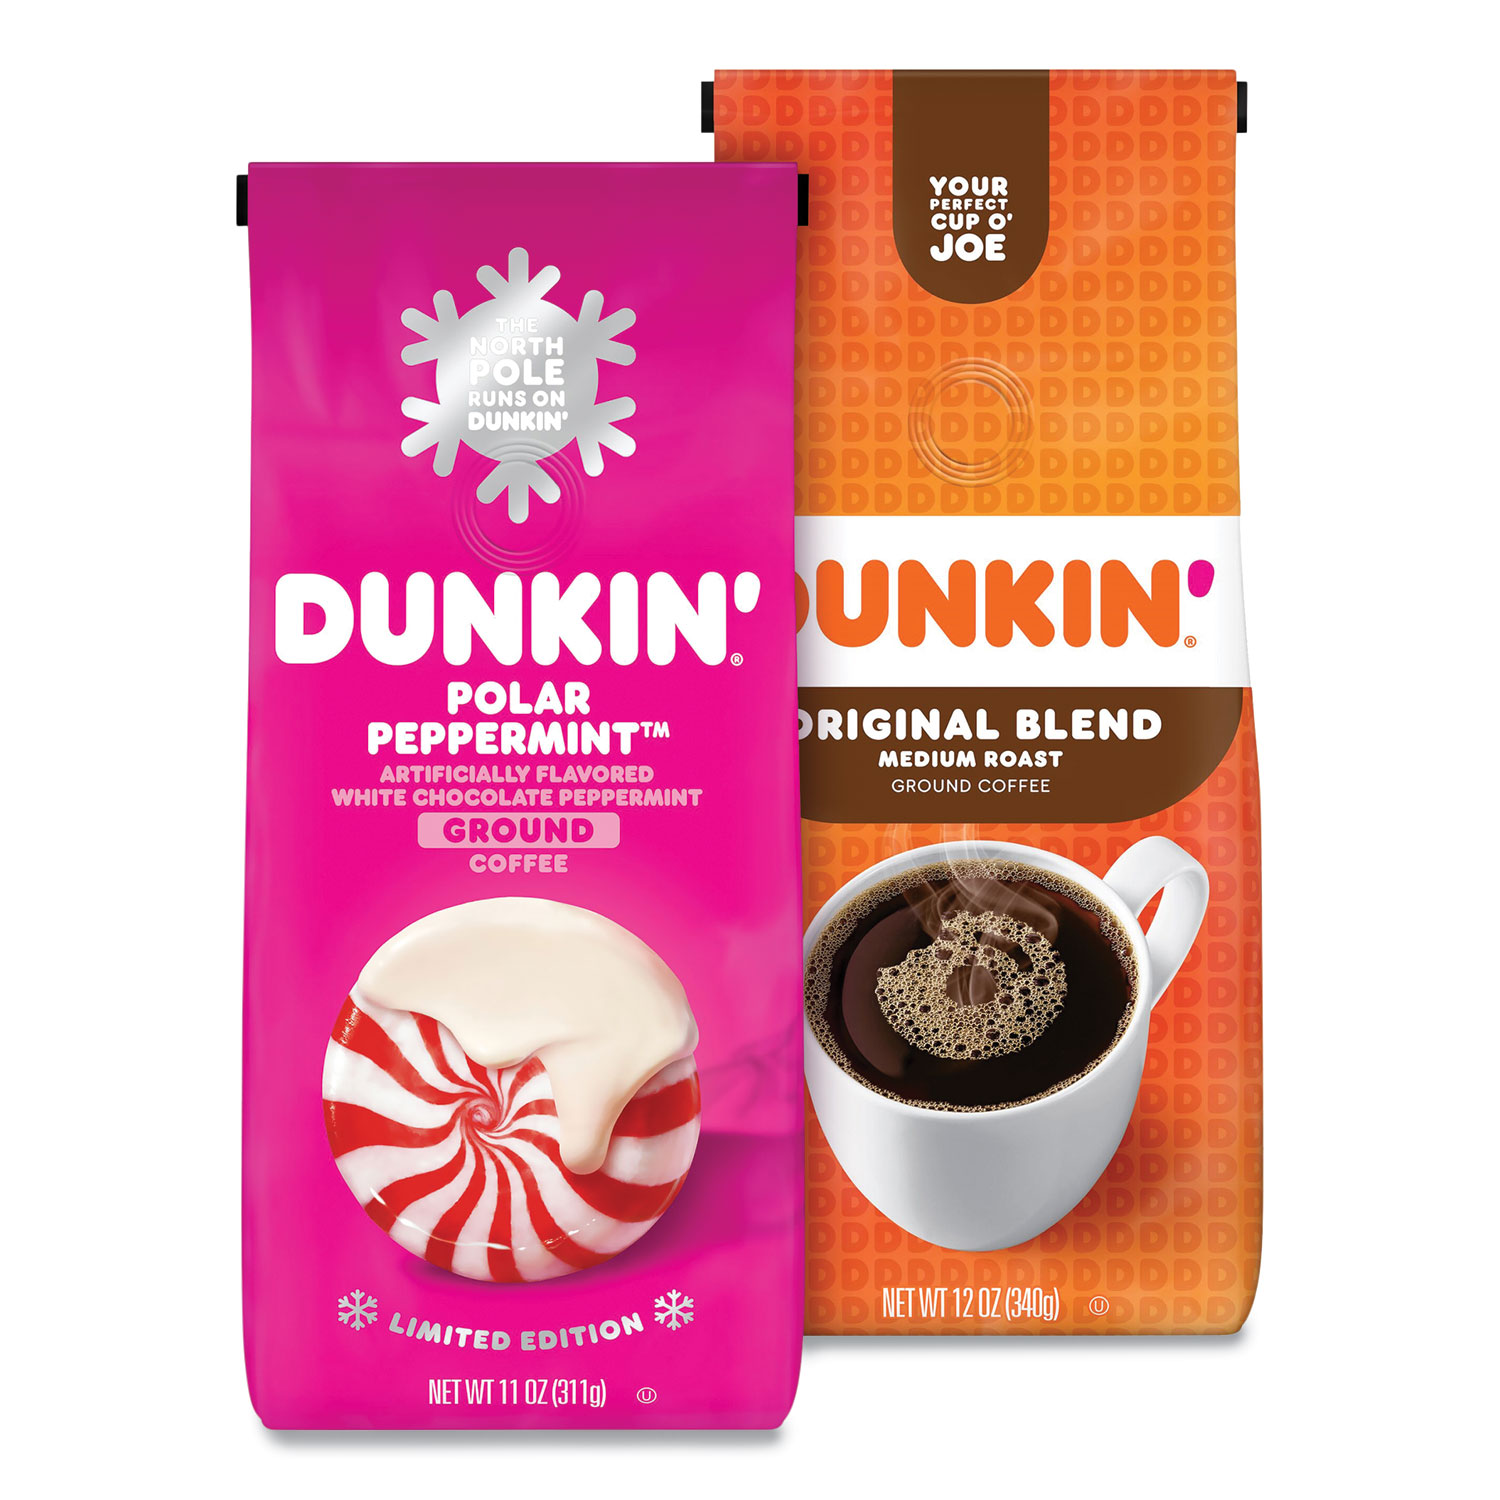  Dunkin Donuts 307-00308 Original Blend Coffee, Dunkin Original/Polar Peppermint, 12 oz/11 oz Bag, 2/Pack, Free Delivery in 1-4 Business Days (GRR30700308) 